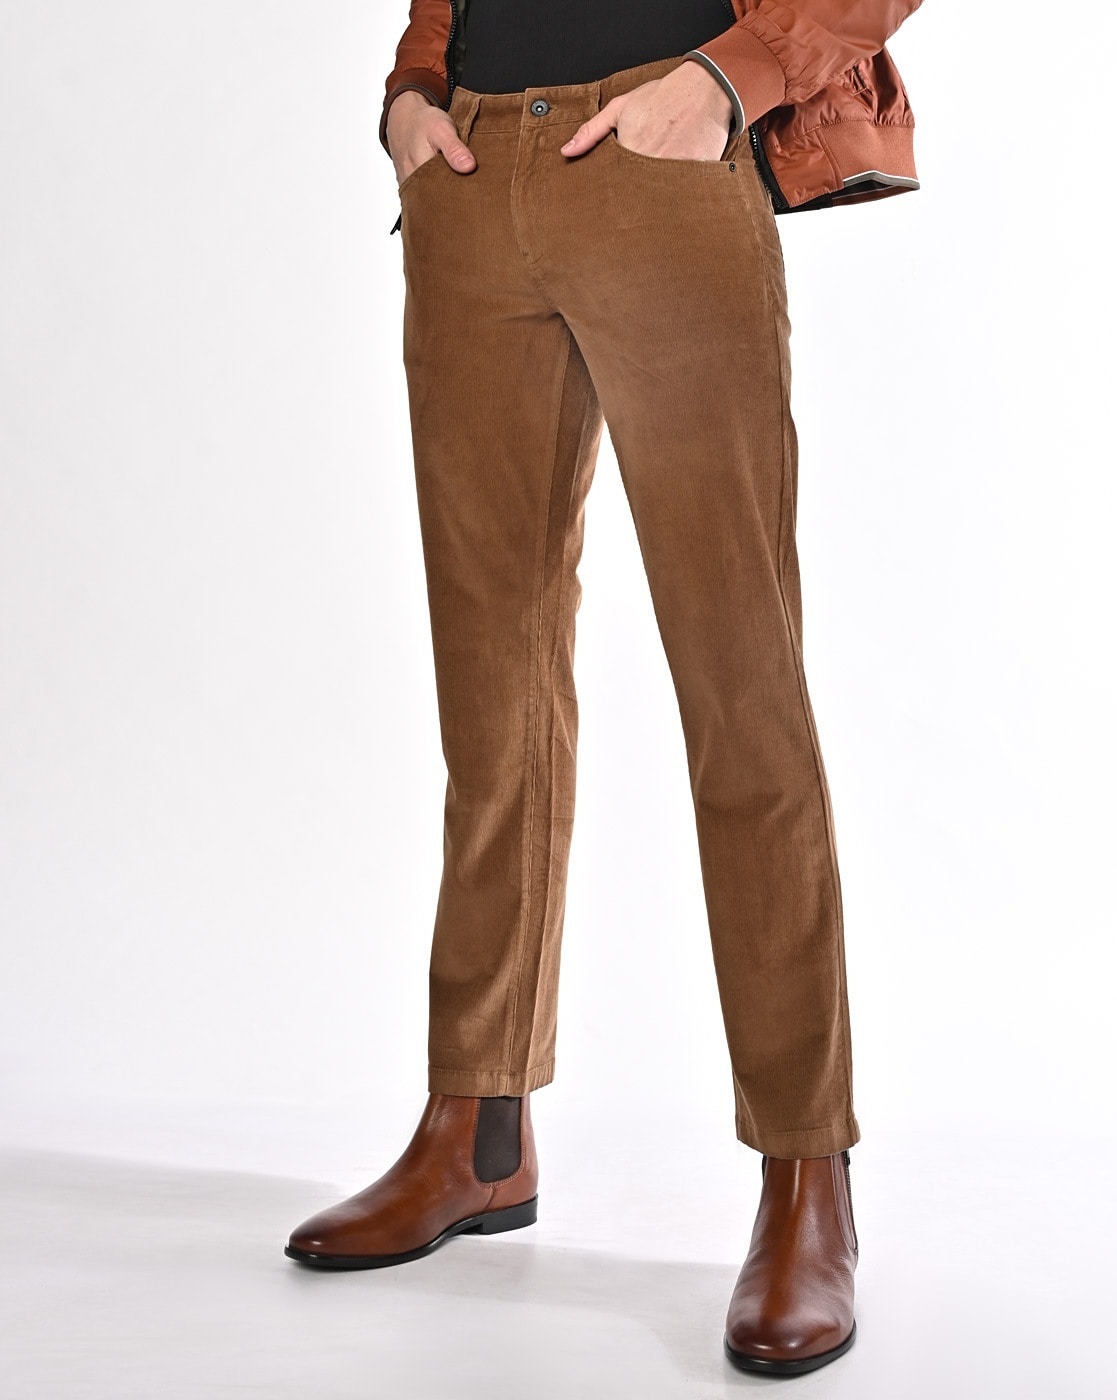 Buy Brown Trousers & Pants for Men by Metal Online | Ajio.com